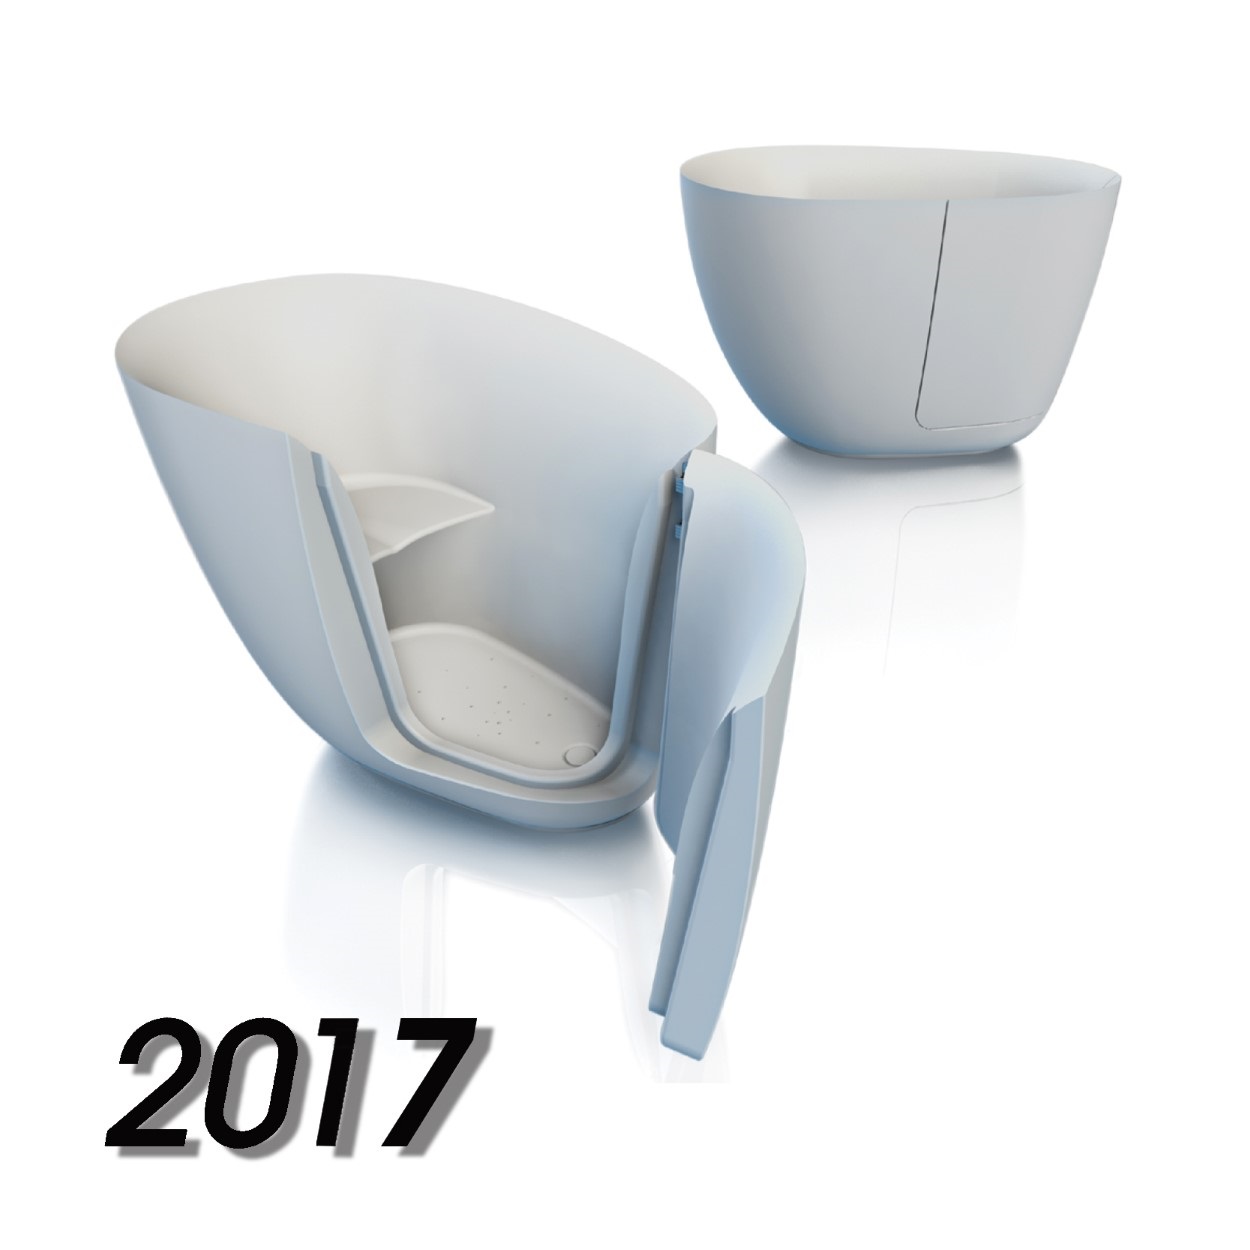 i-SPA Innovative Bathroom Product Award 2017